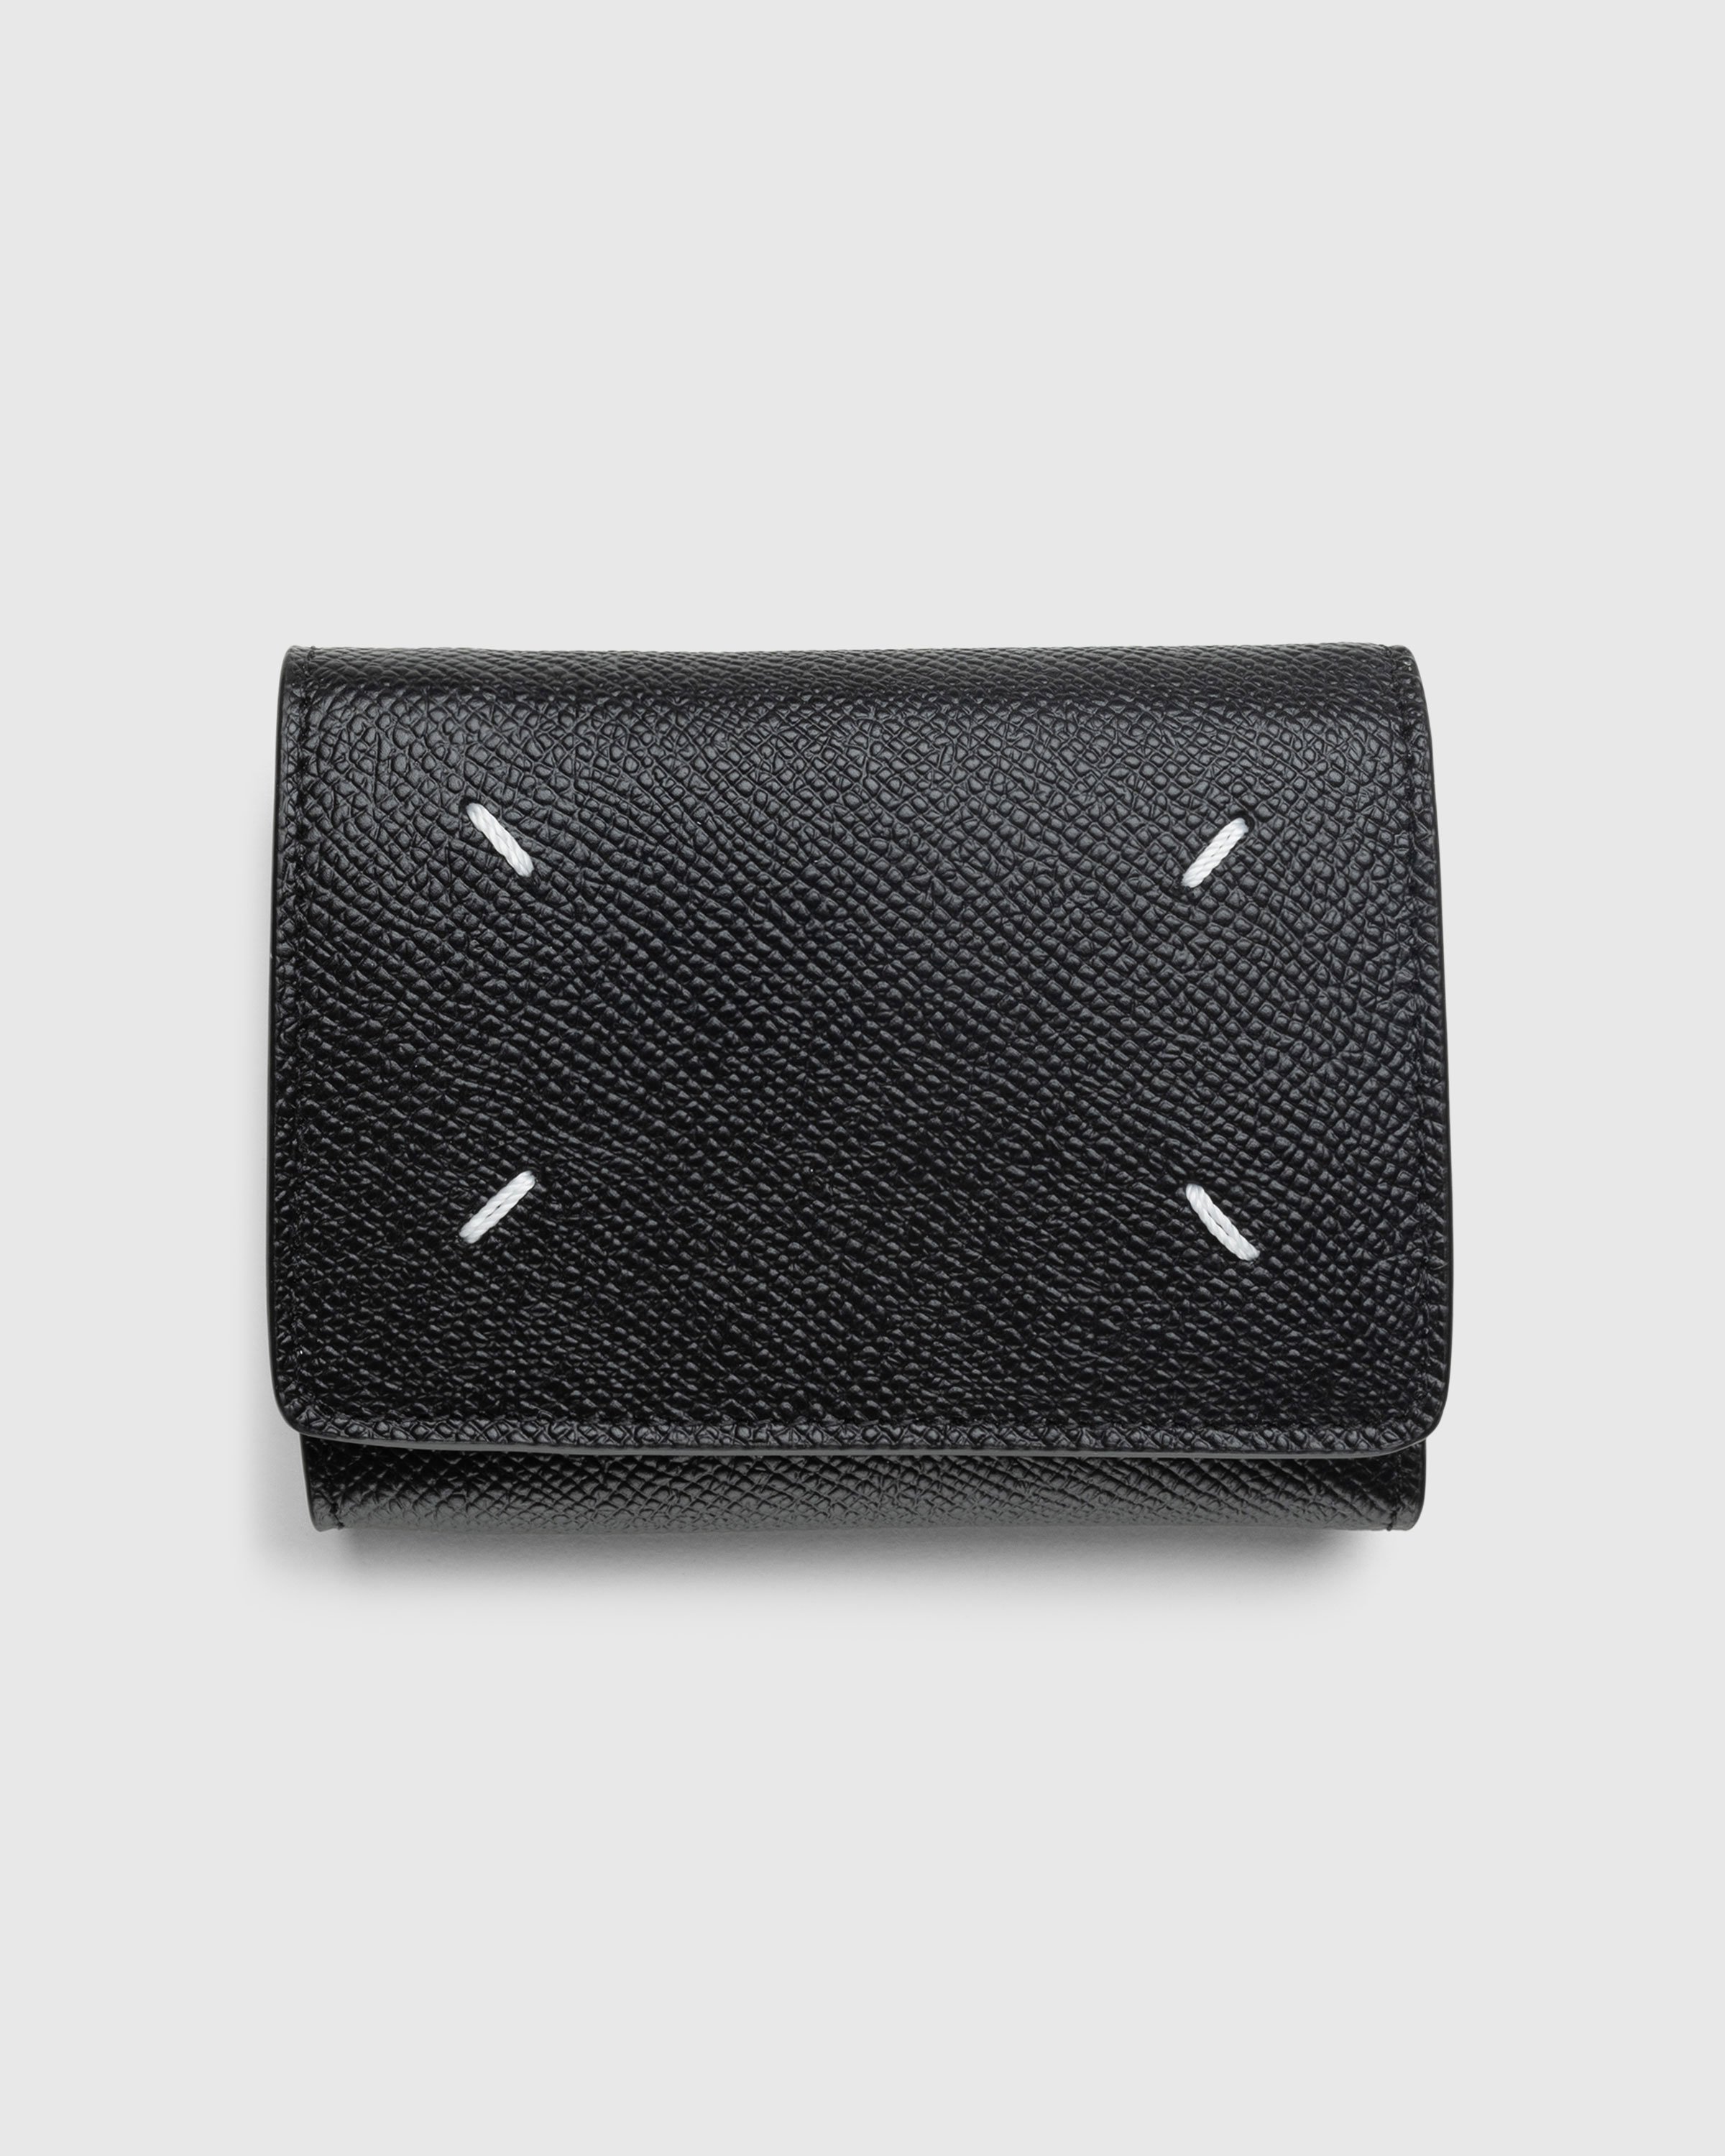 Maison Margiela - Tri-Fold Zip Wallet Black - Accessories - Black - Image 1